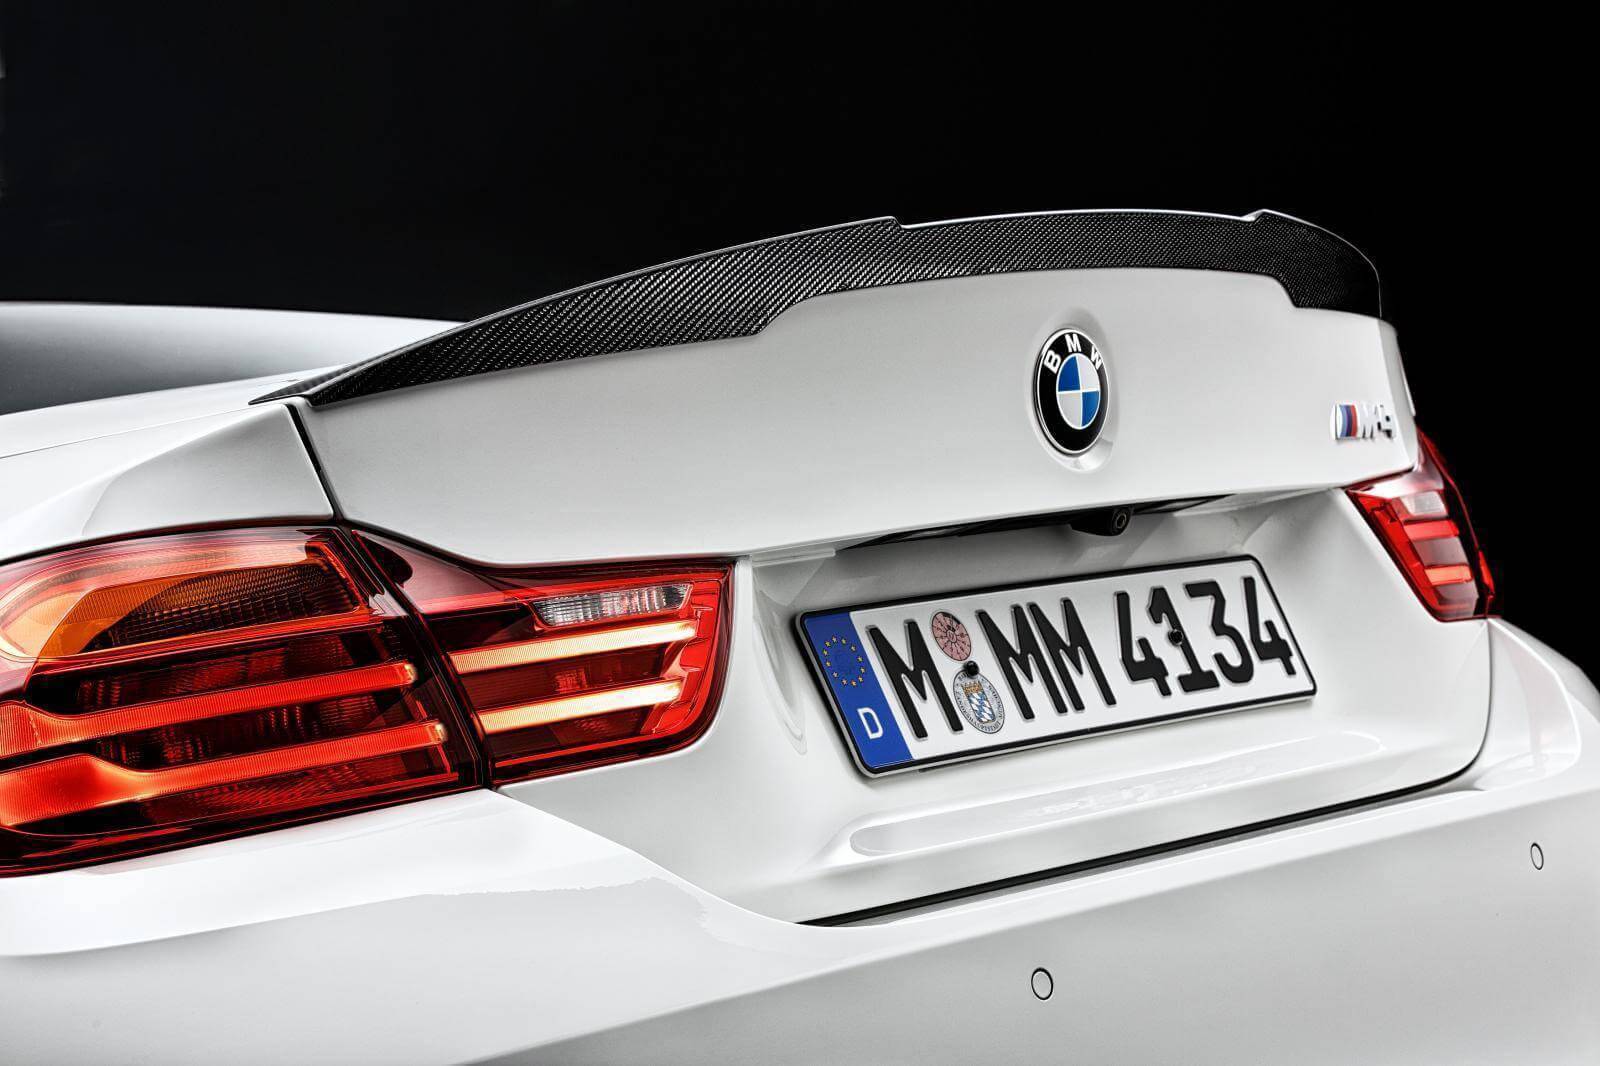 2016 BMW M4 M Performance review